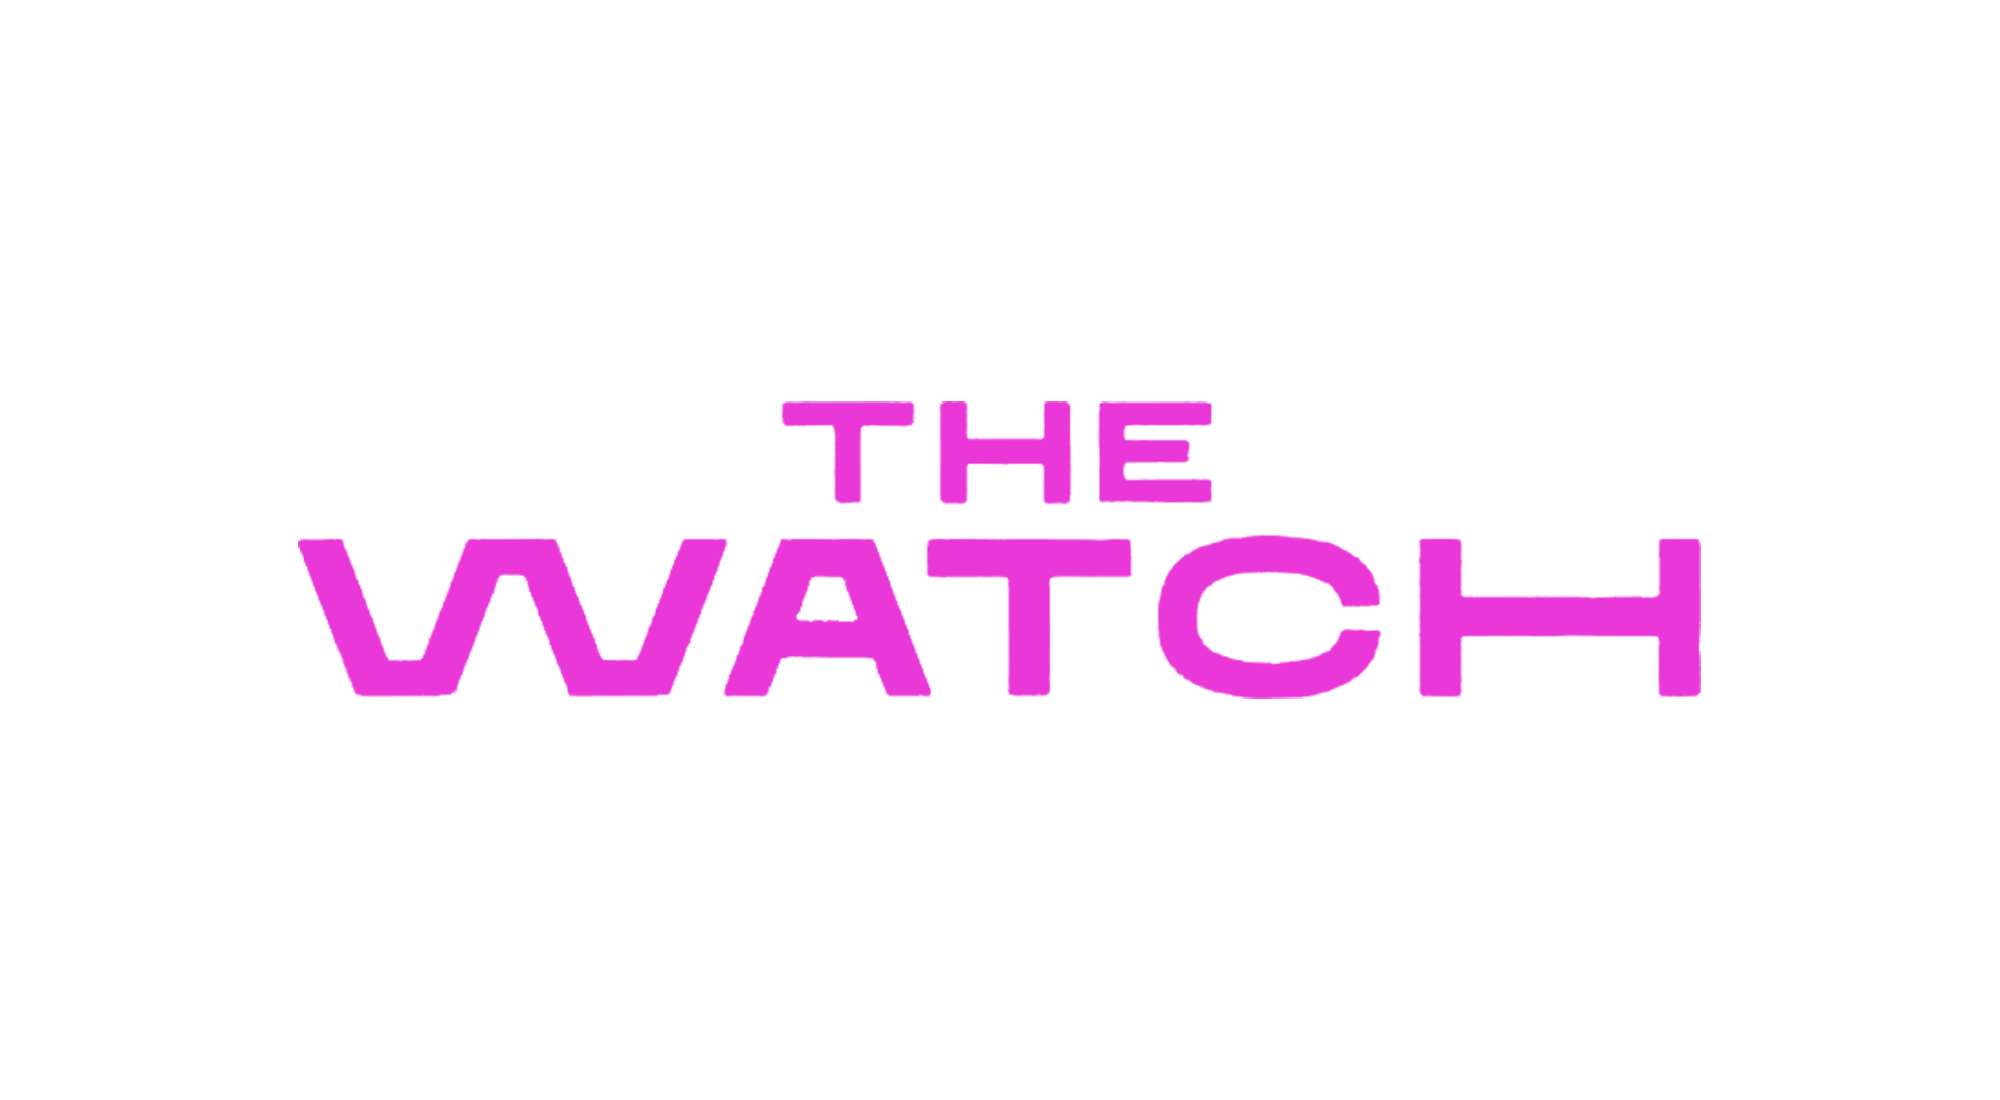 The Watch logo